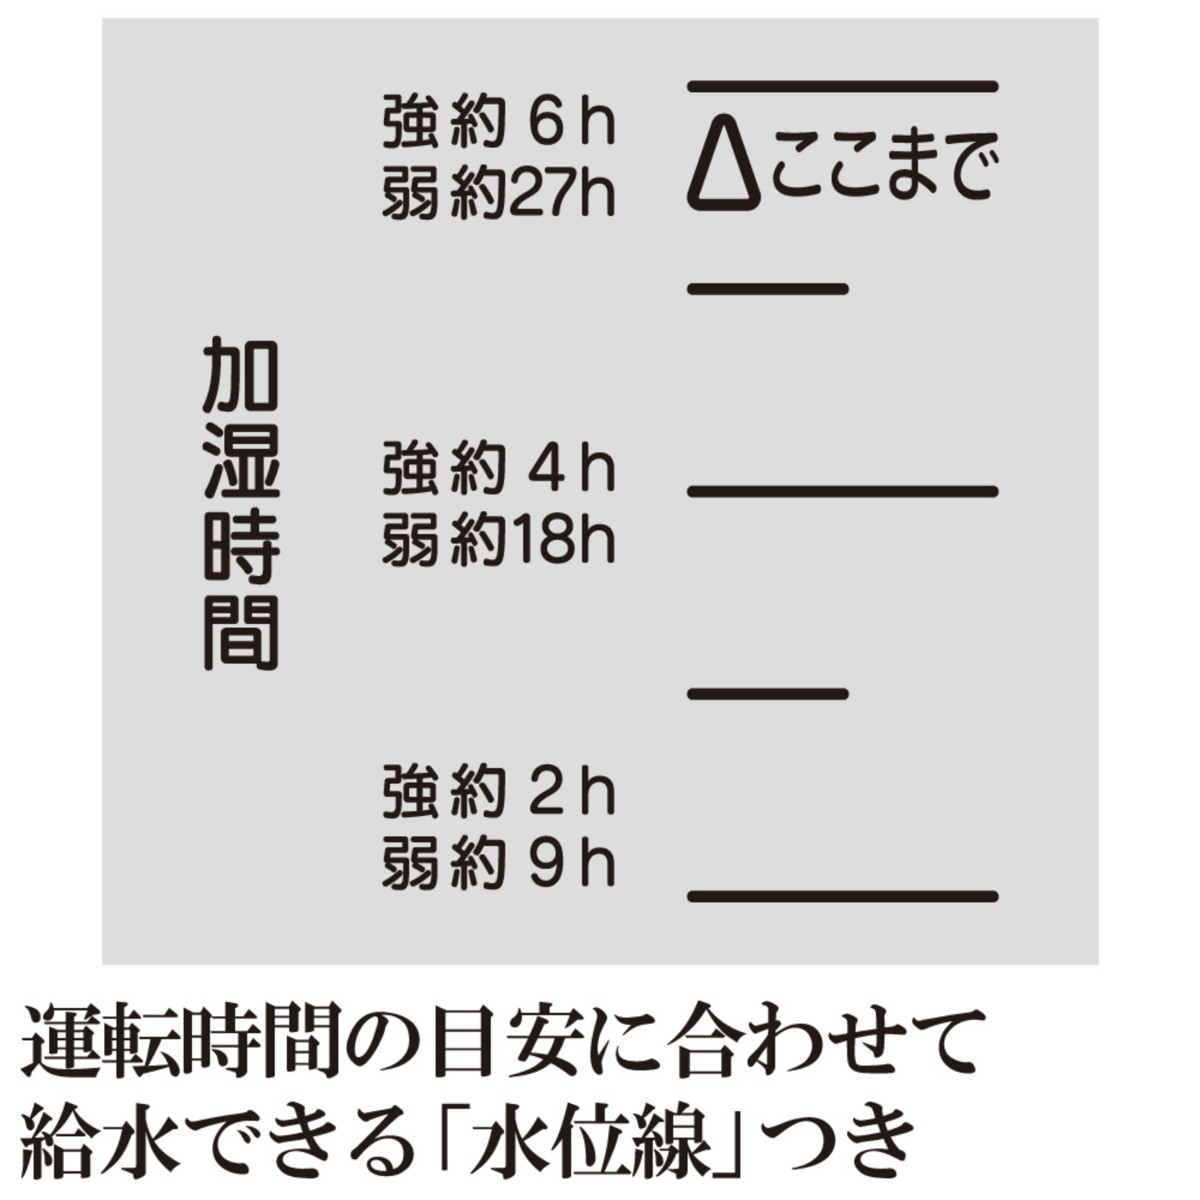 ZOUJIRUSHI スチーム式加湿器 2.2L ホワイト 大容量 木造6畳まで/プレハブ洋室10畳まで 日本製 乾燥対策